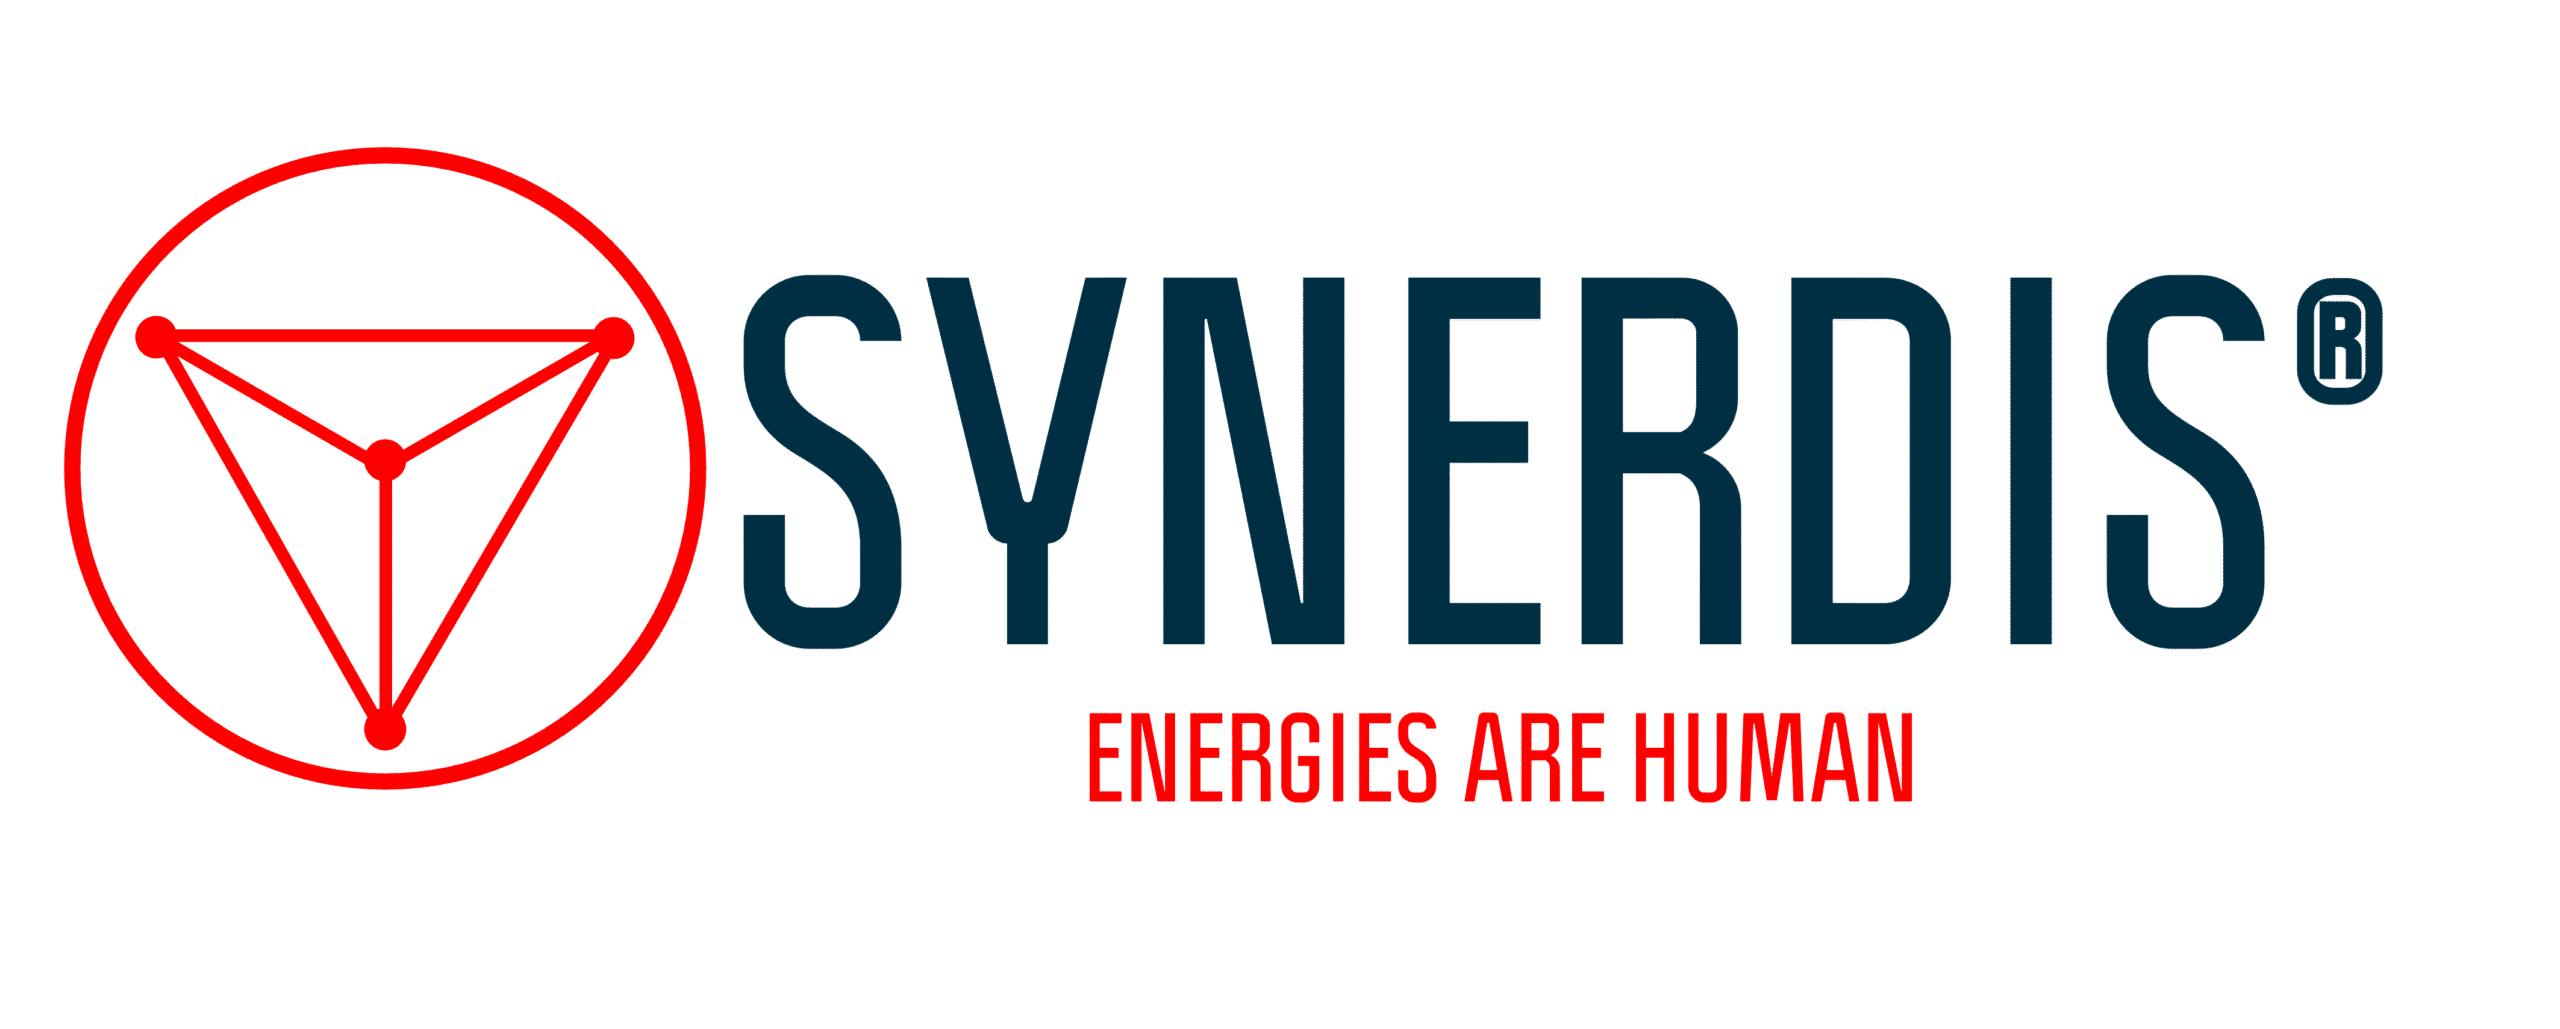 SYNERDIS distribution transformers and switchgear